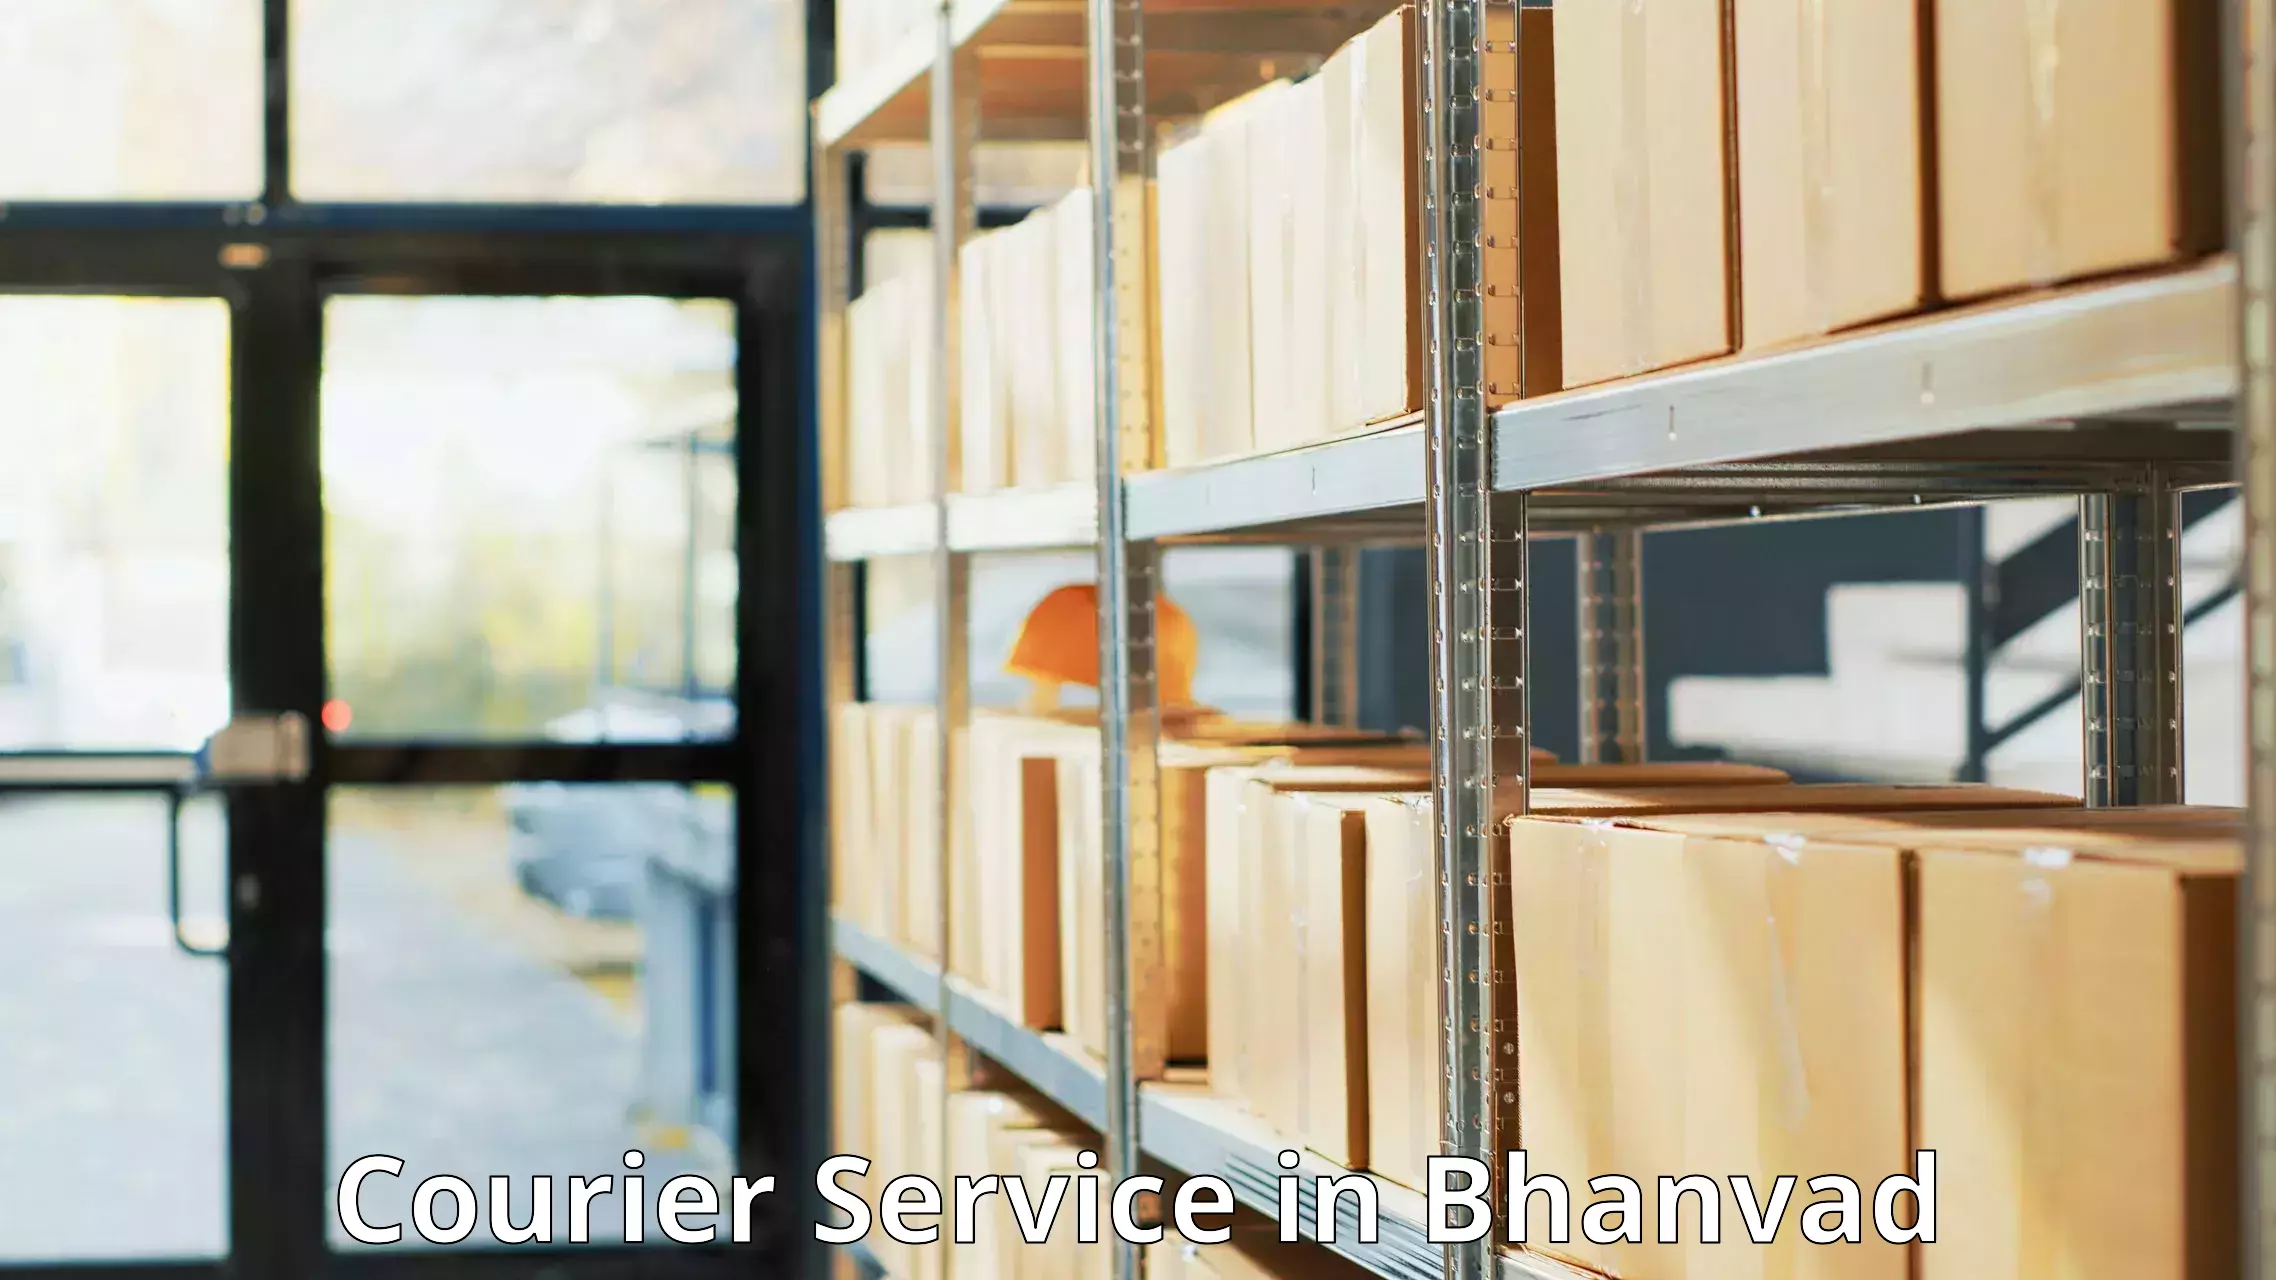 Logistics service provider in Bhanvad